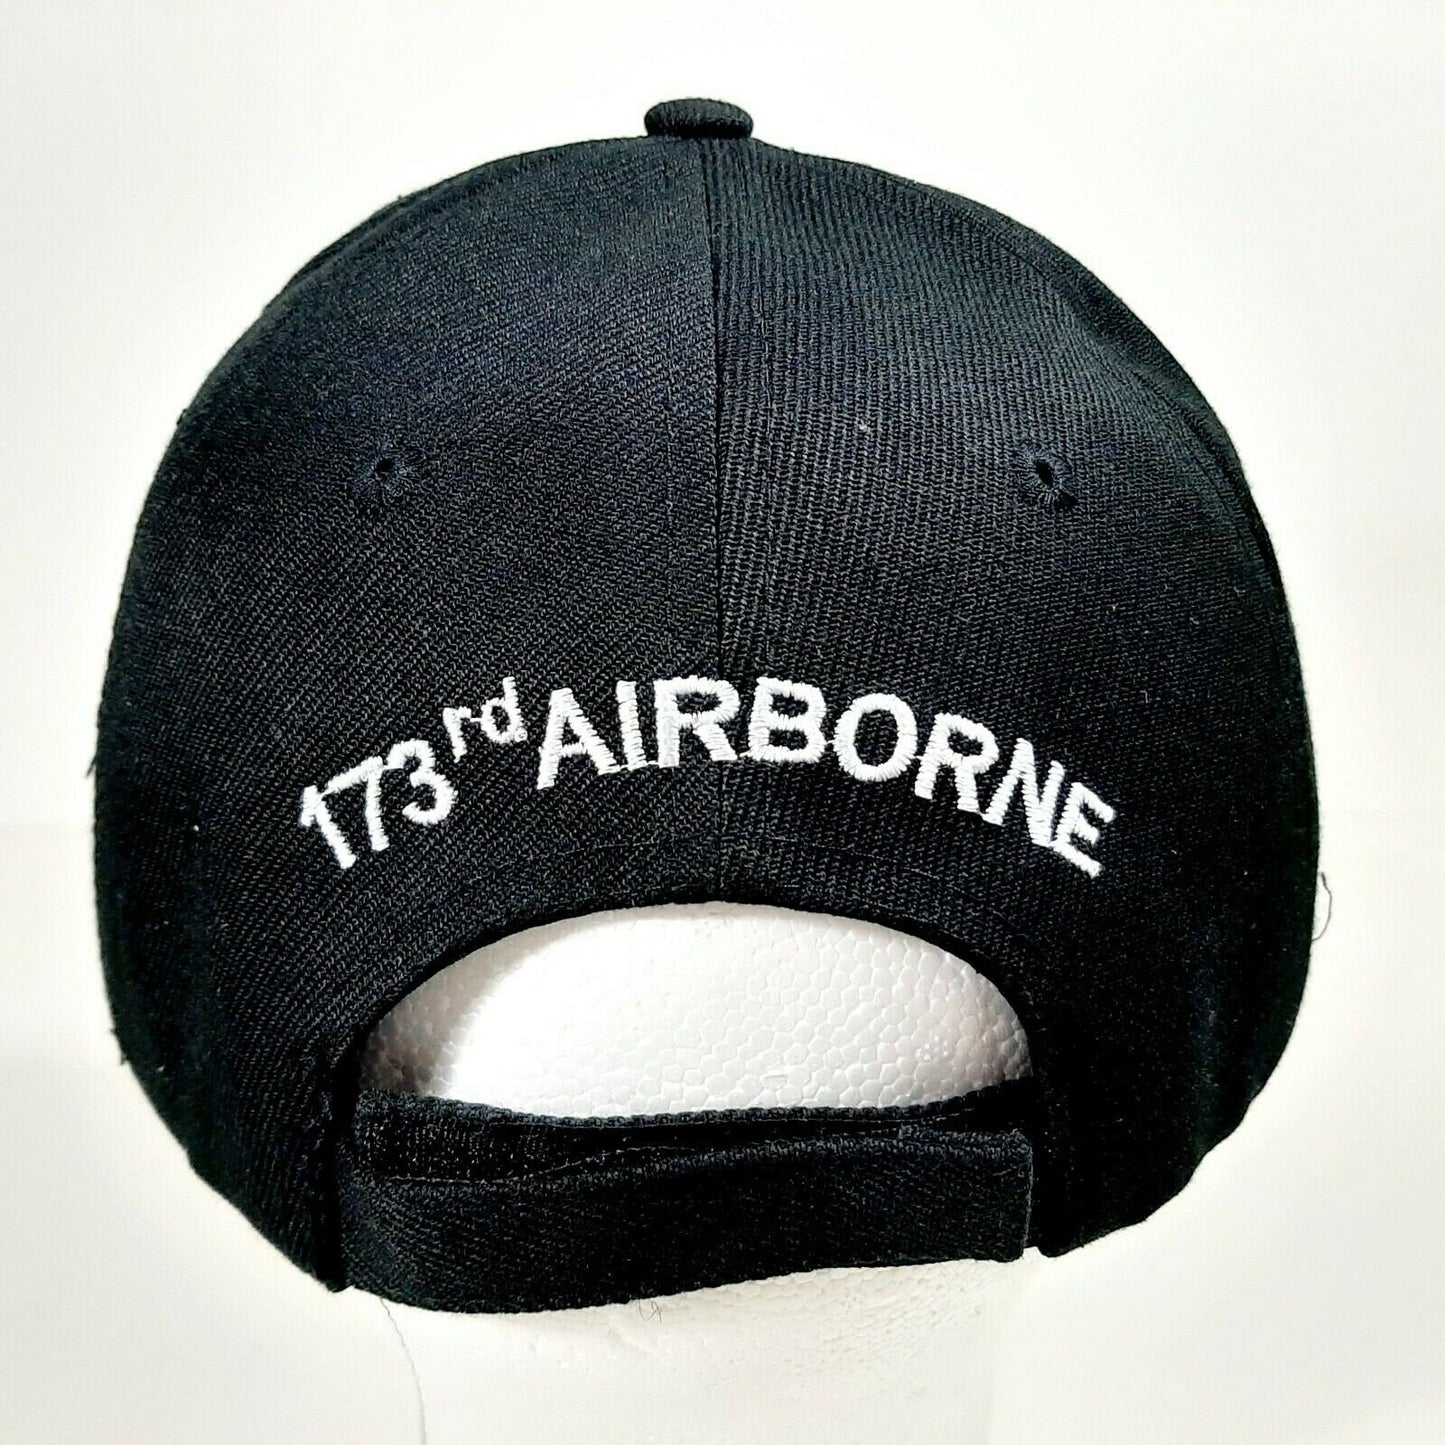 US Army 173rd Airborne Men's Ball Cap Hat Black